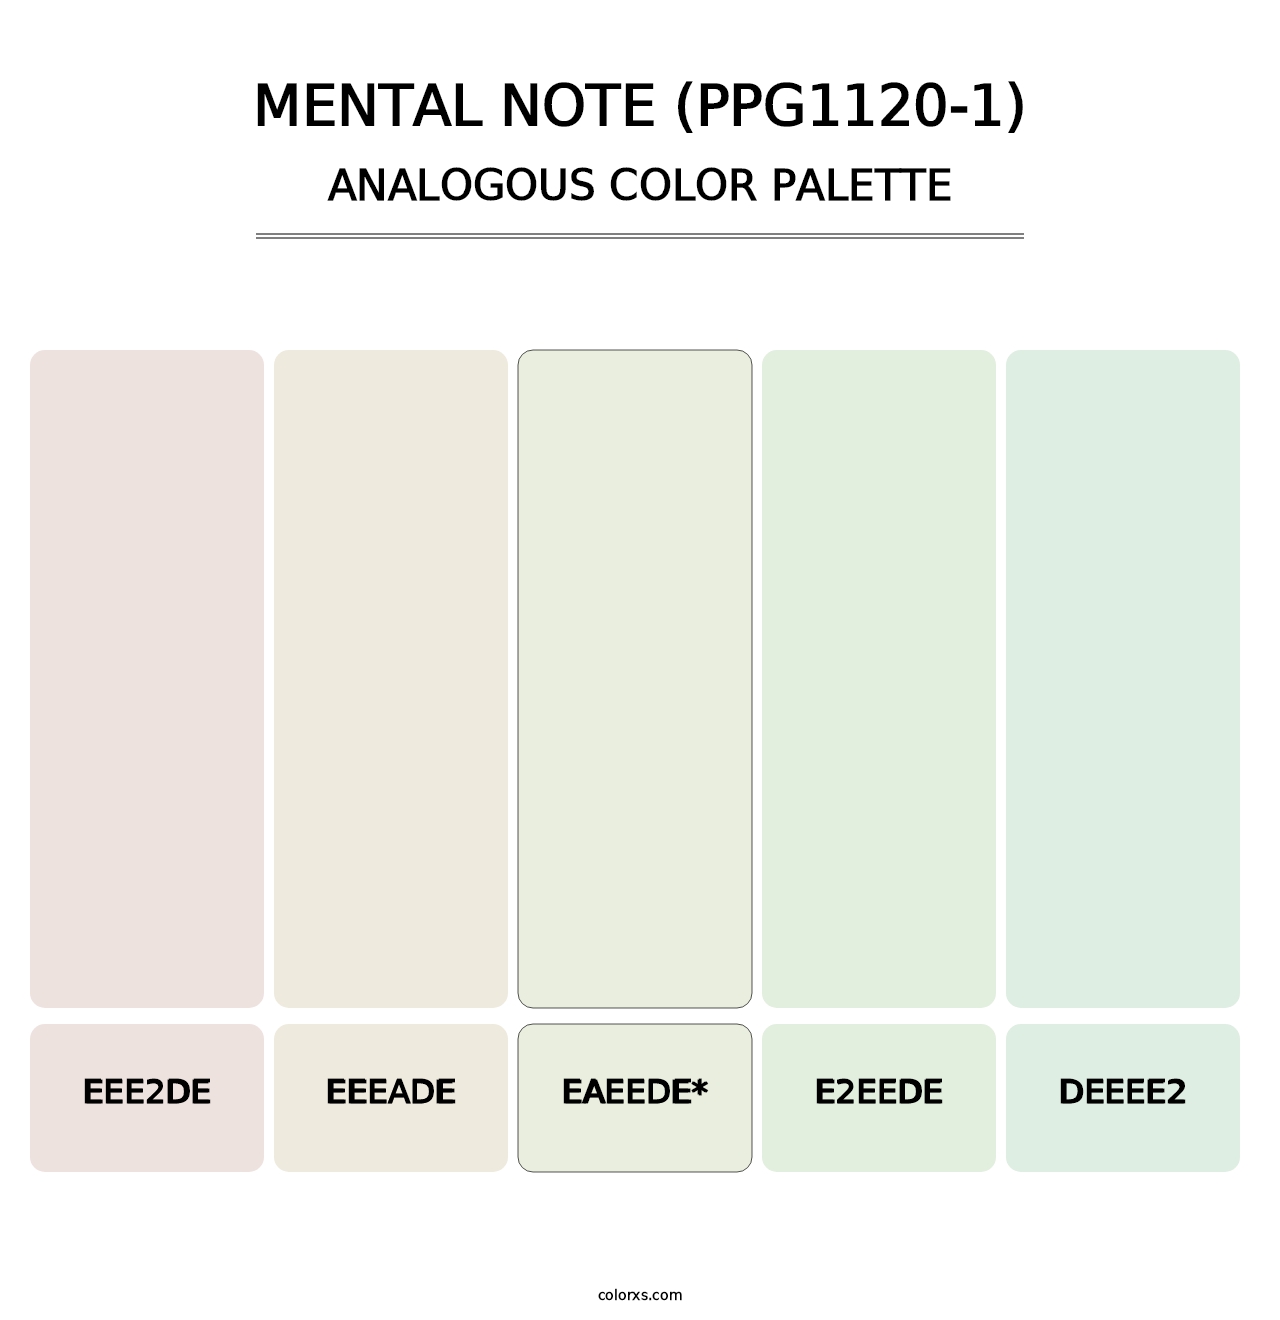 Mental Note (PPG1120-1) - Analogous Color Palette